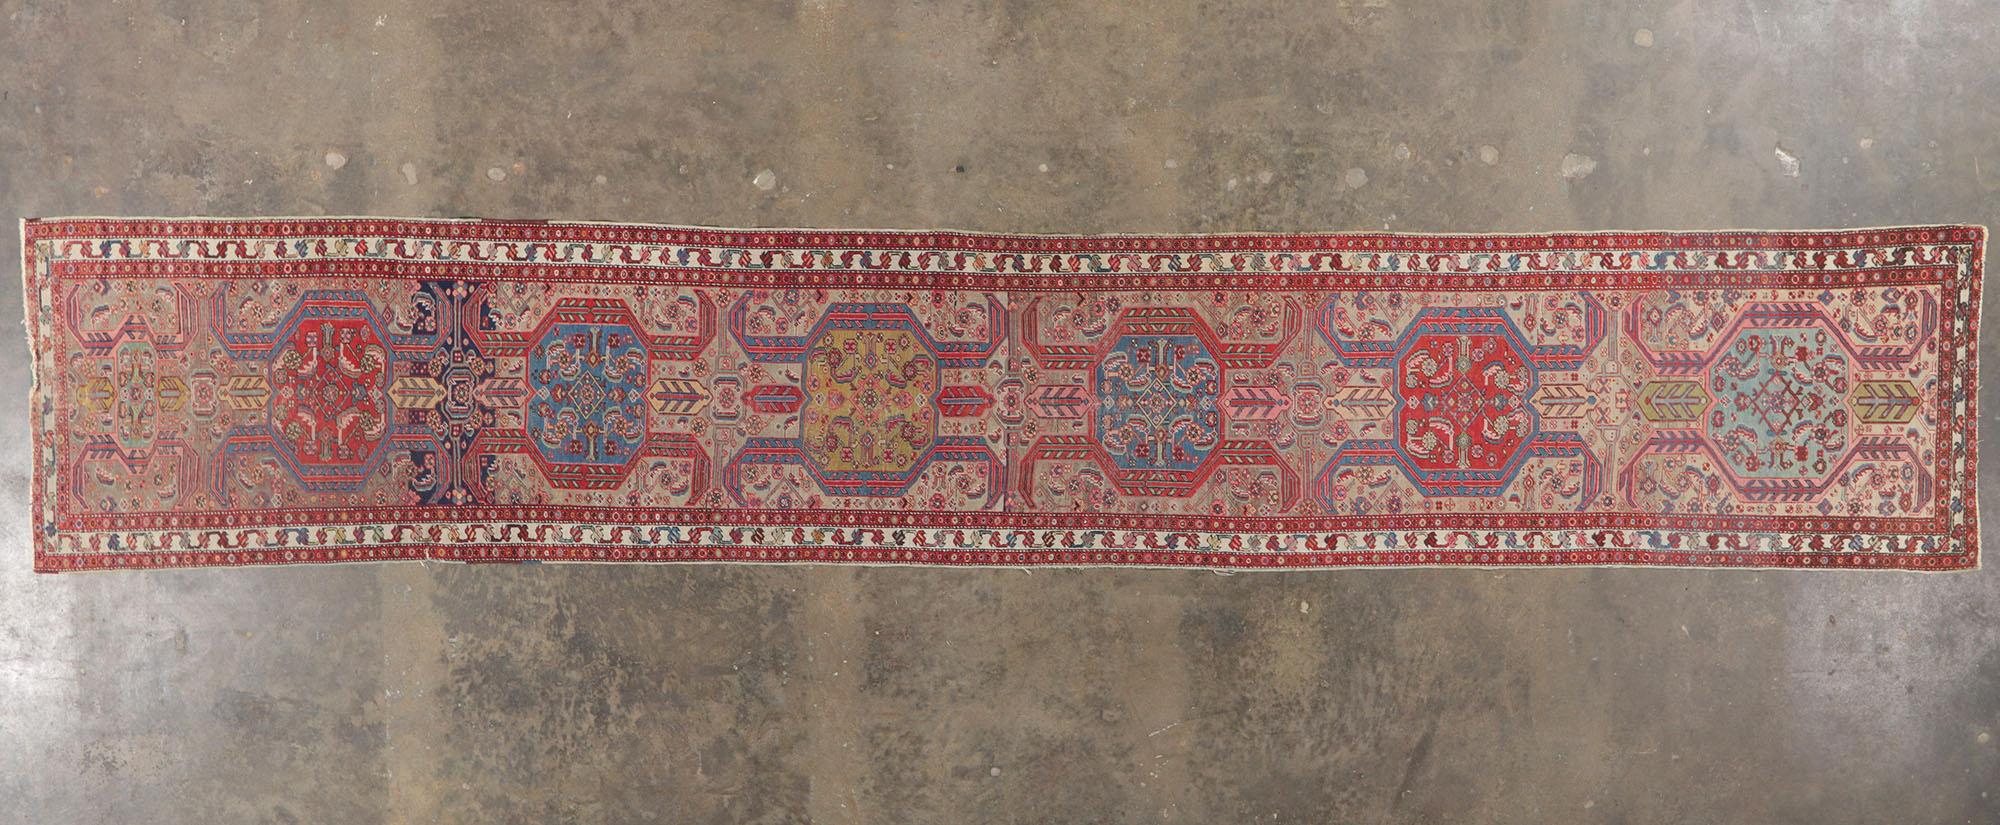 Antique Persian Serapi Runner For Sale 2